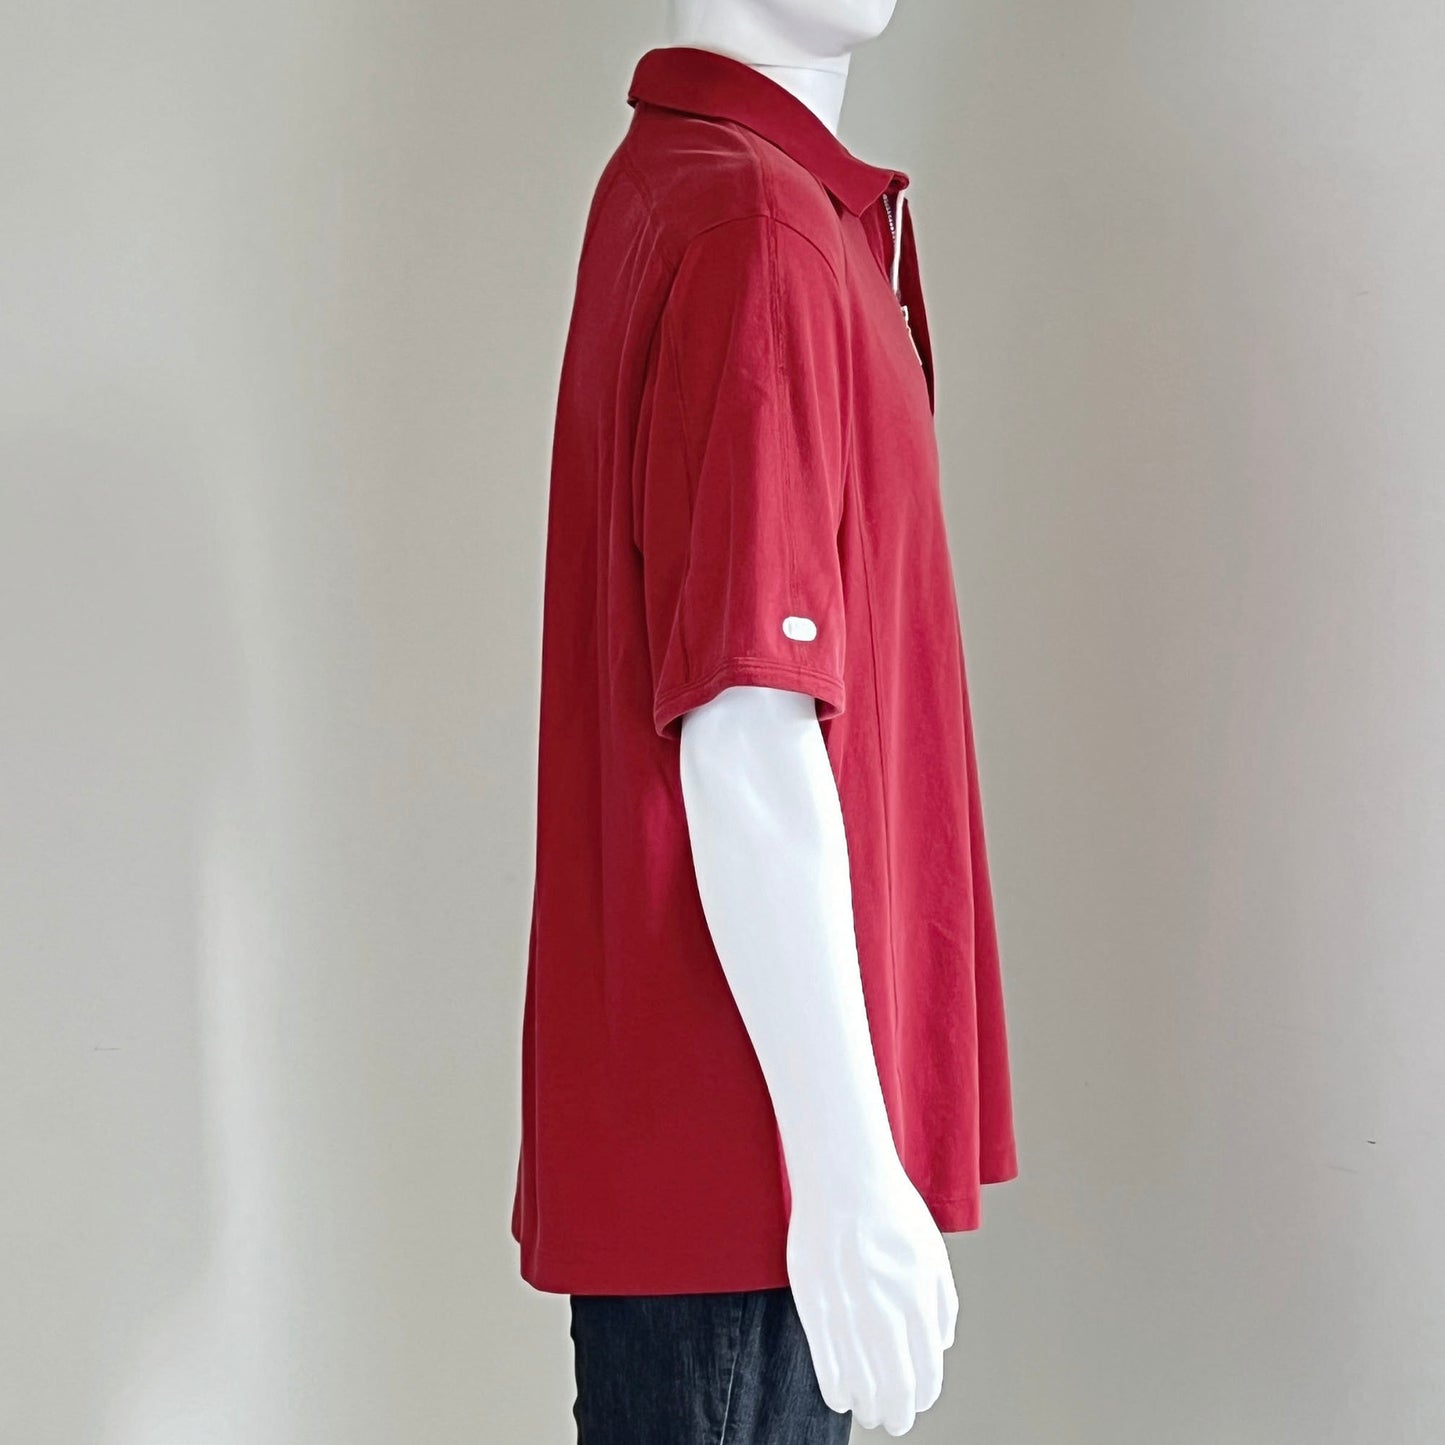 Tommy-Bahama-Short-Sleeve-Red-Polo-Shirt.-Side-view.-Shop-eBargainsAndDeals.com